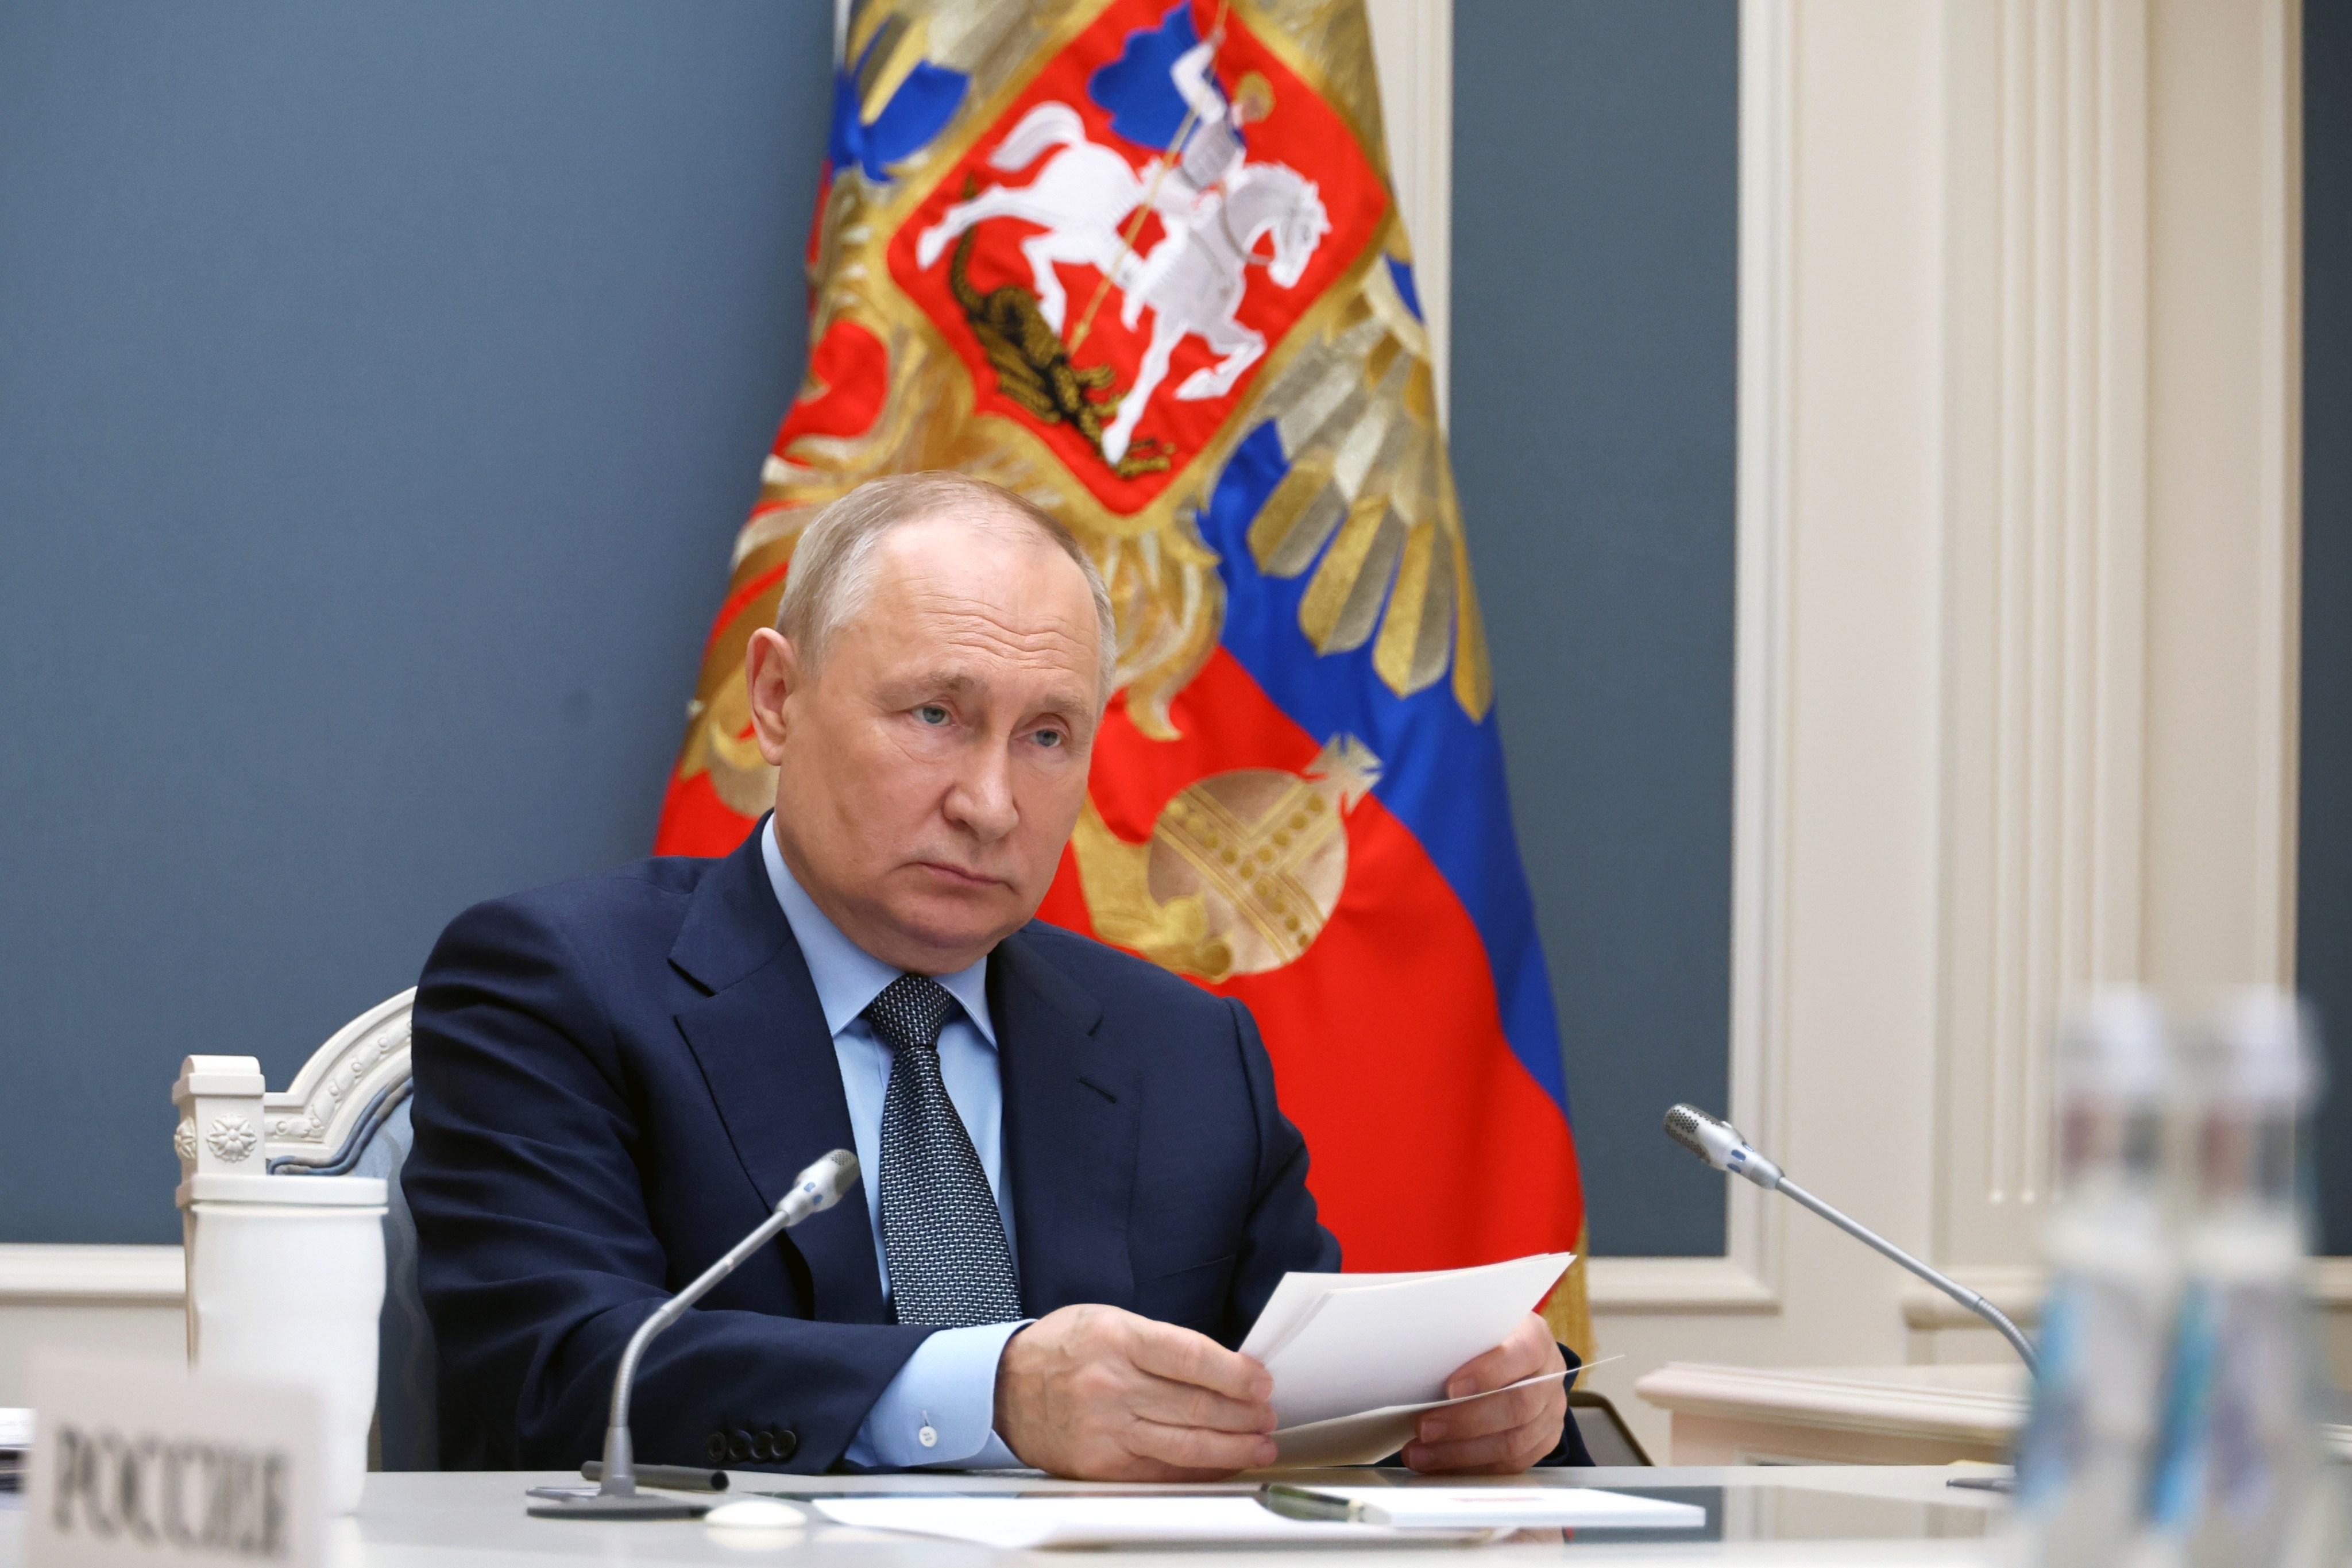 Russian President Vladimir Putin addresses the G20 summit via videoconference in Moscow on Wednesday. Photo: Sputnik via AP